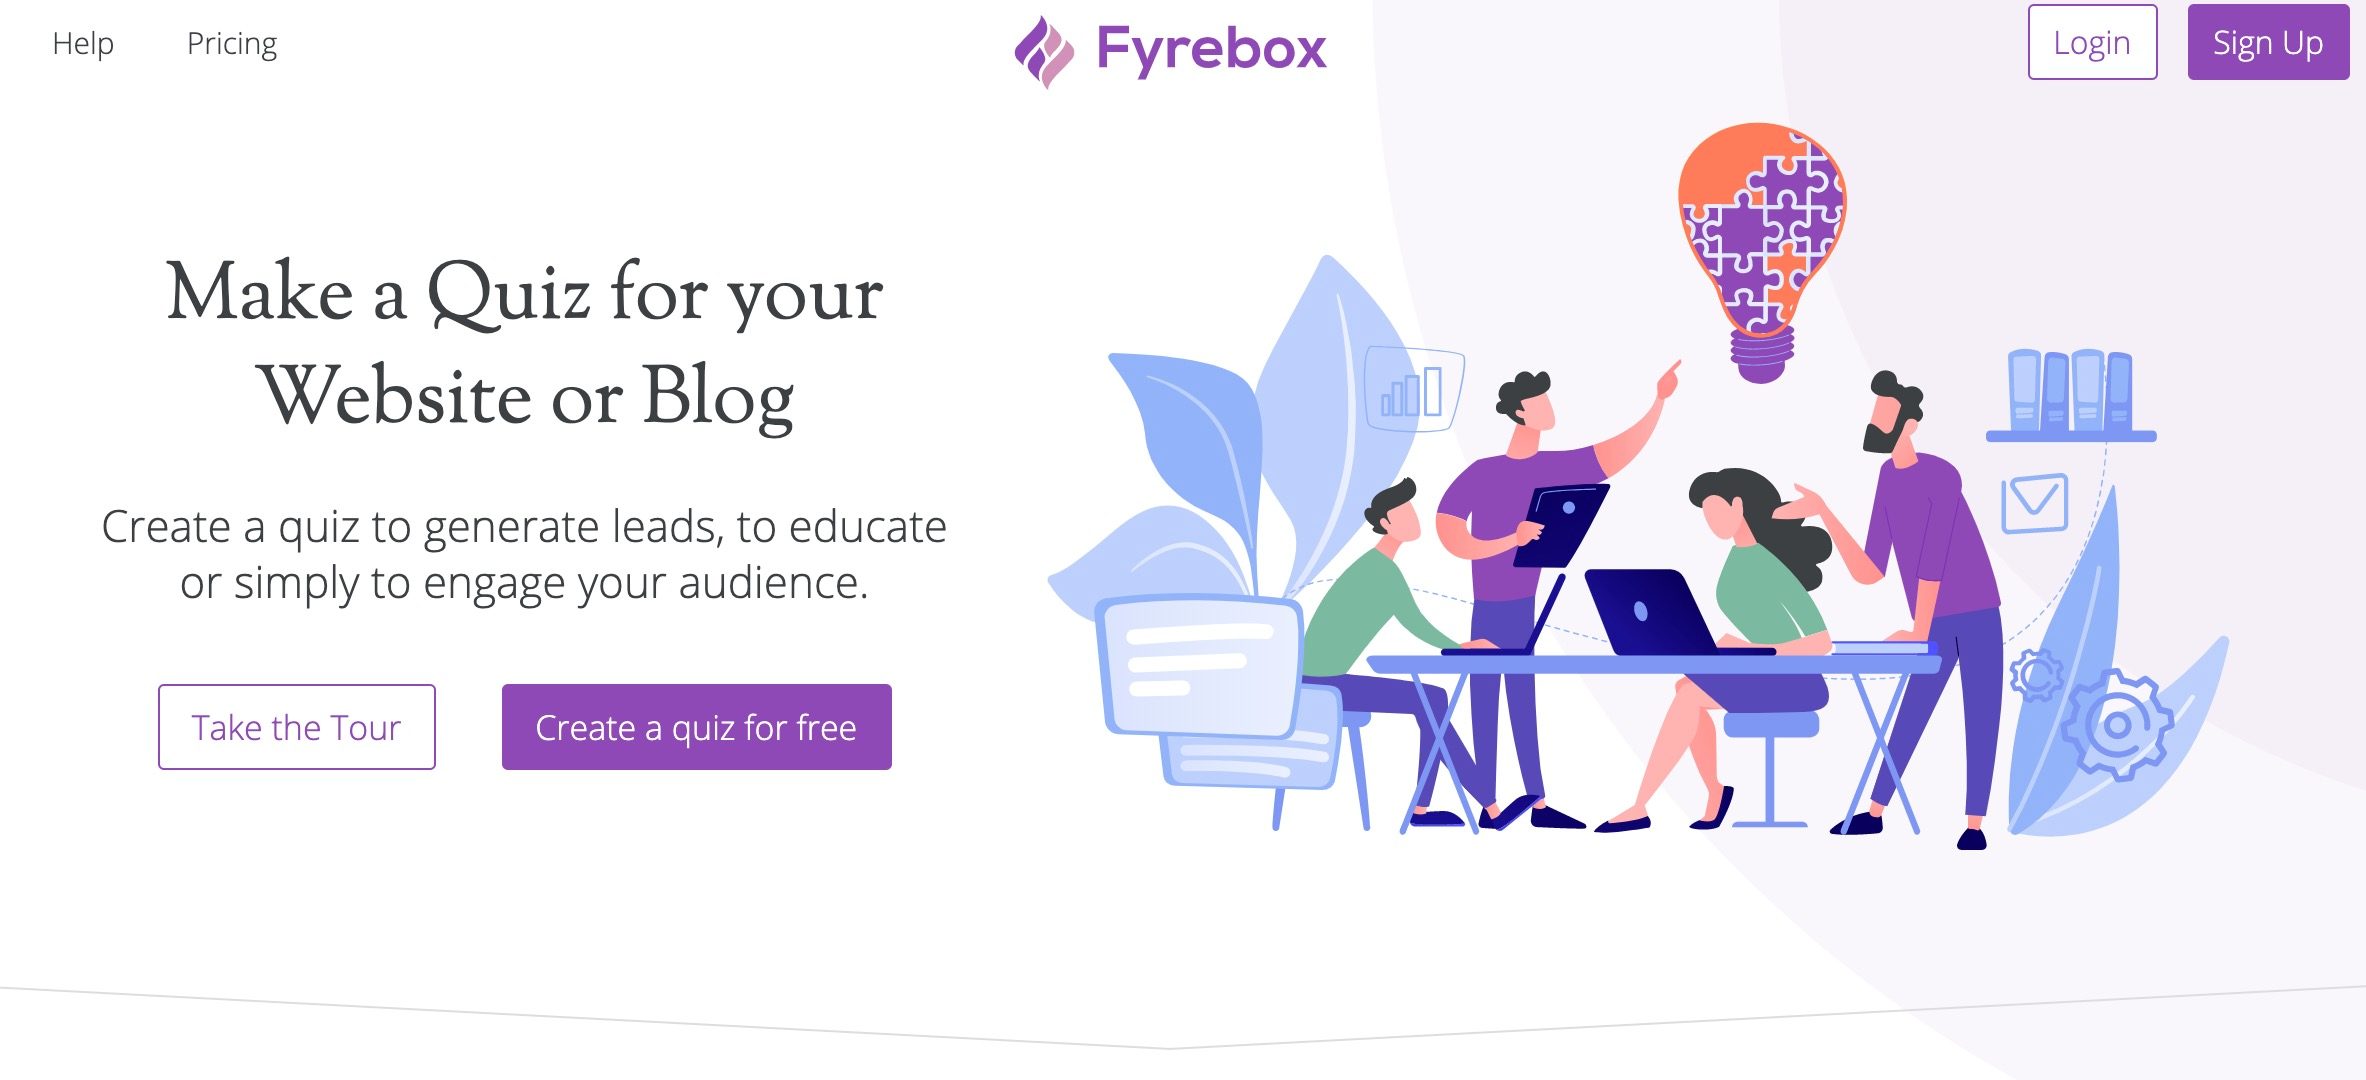 Find detailed information about Fyrebox